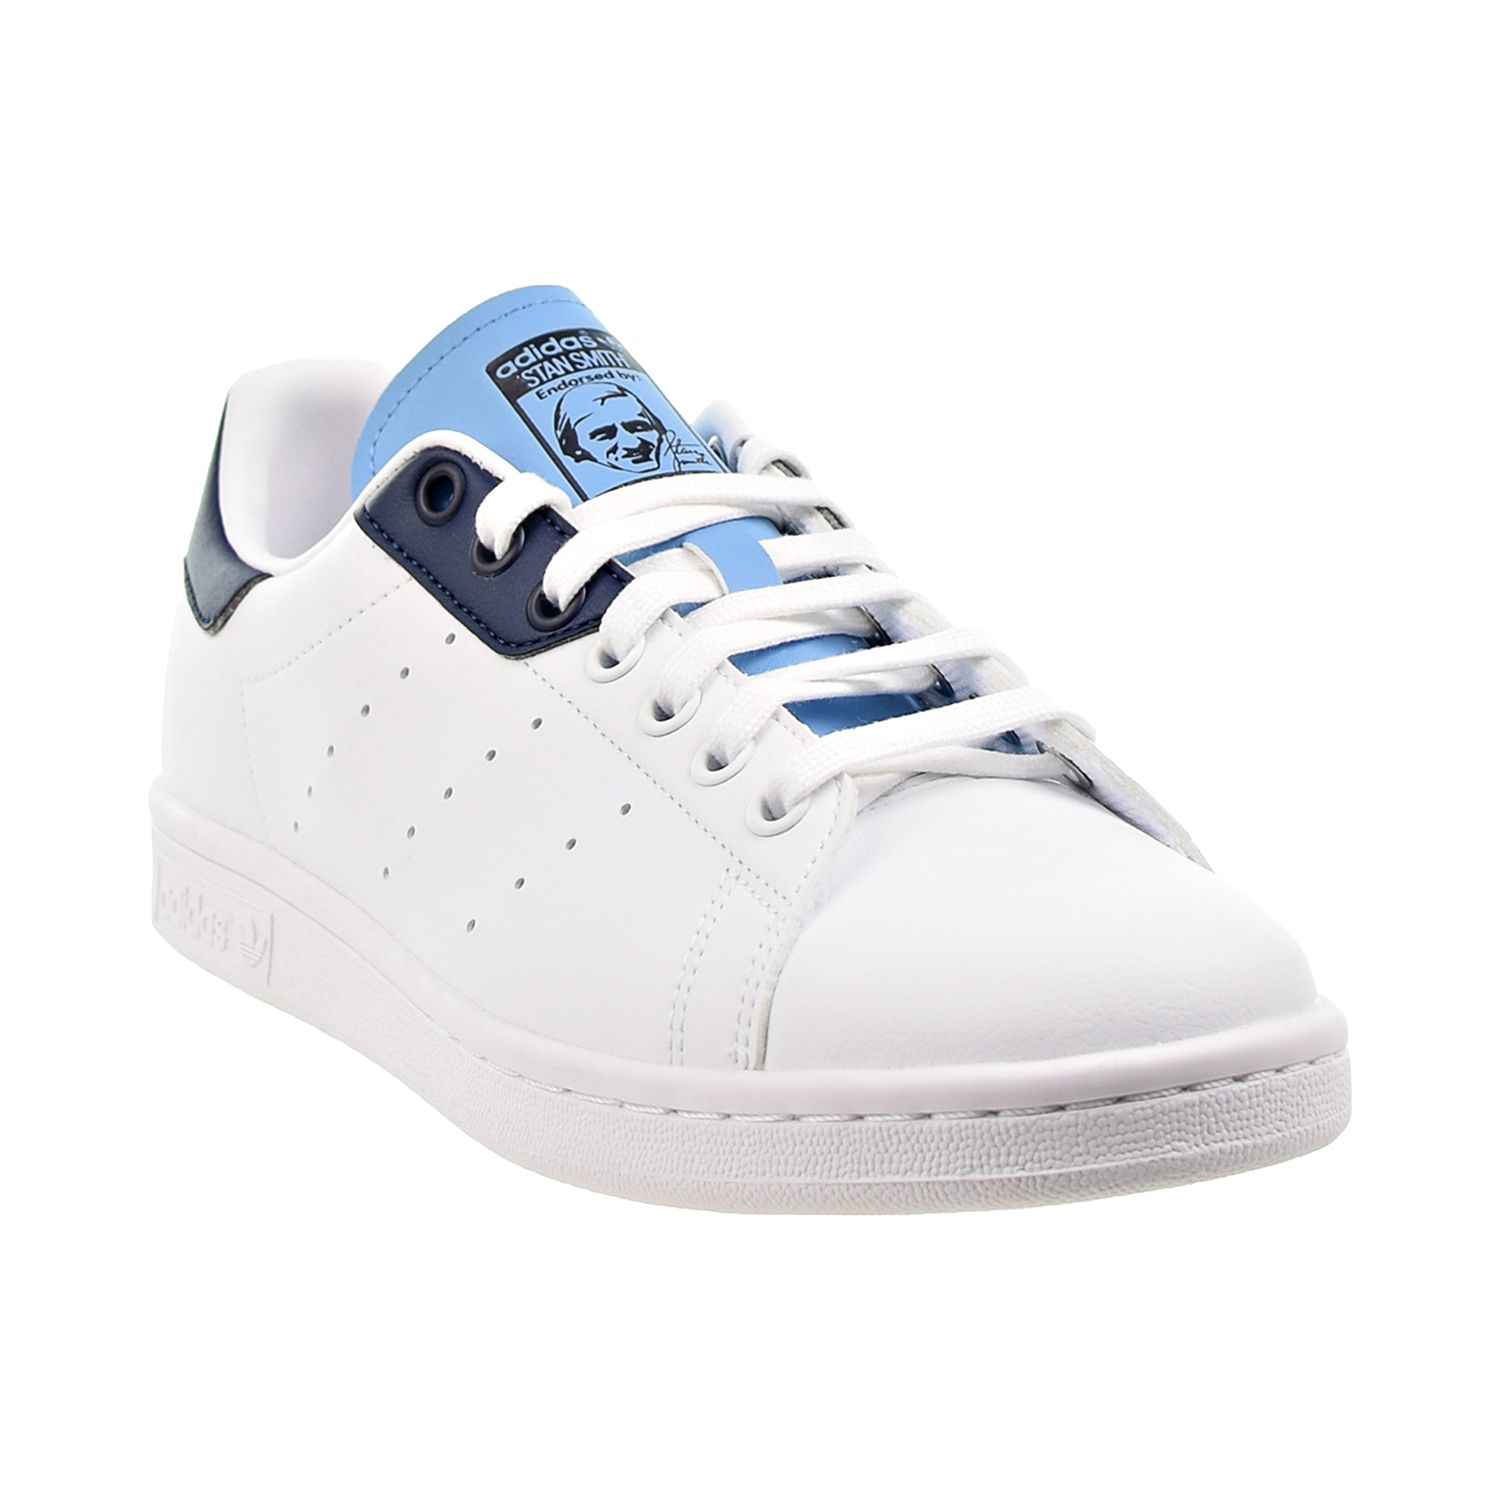 Adidas Stan Smith Men's Shoes Cloud White-Collegiate Navy-Light Blue h00332